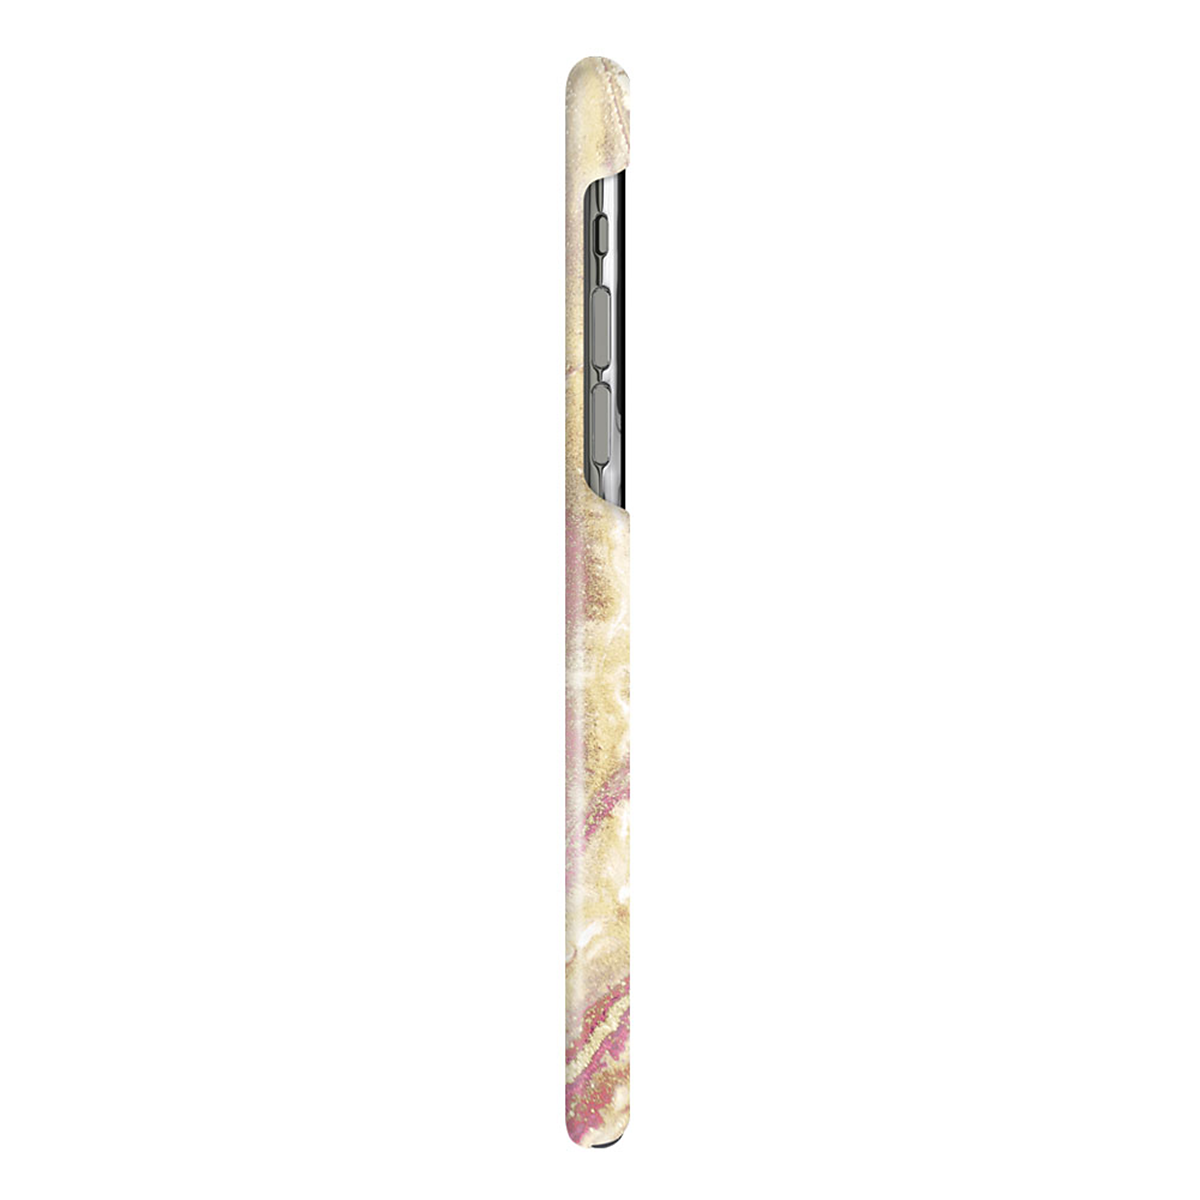 iDeal Fashion Case magnetskal iPhone XR, Golden Blush Marble